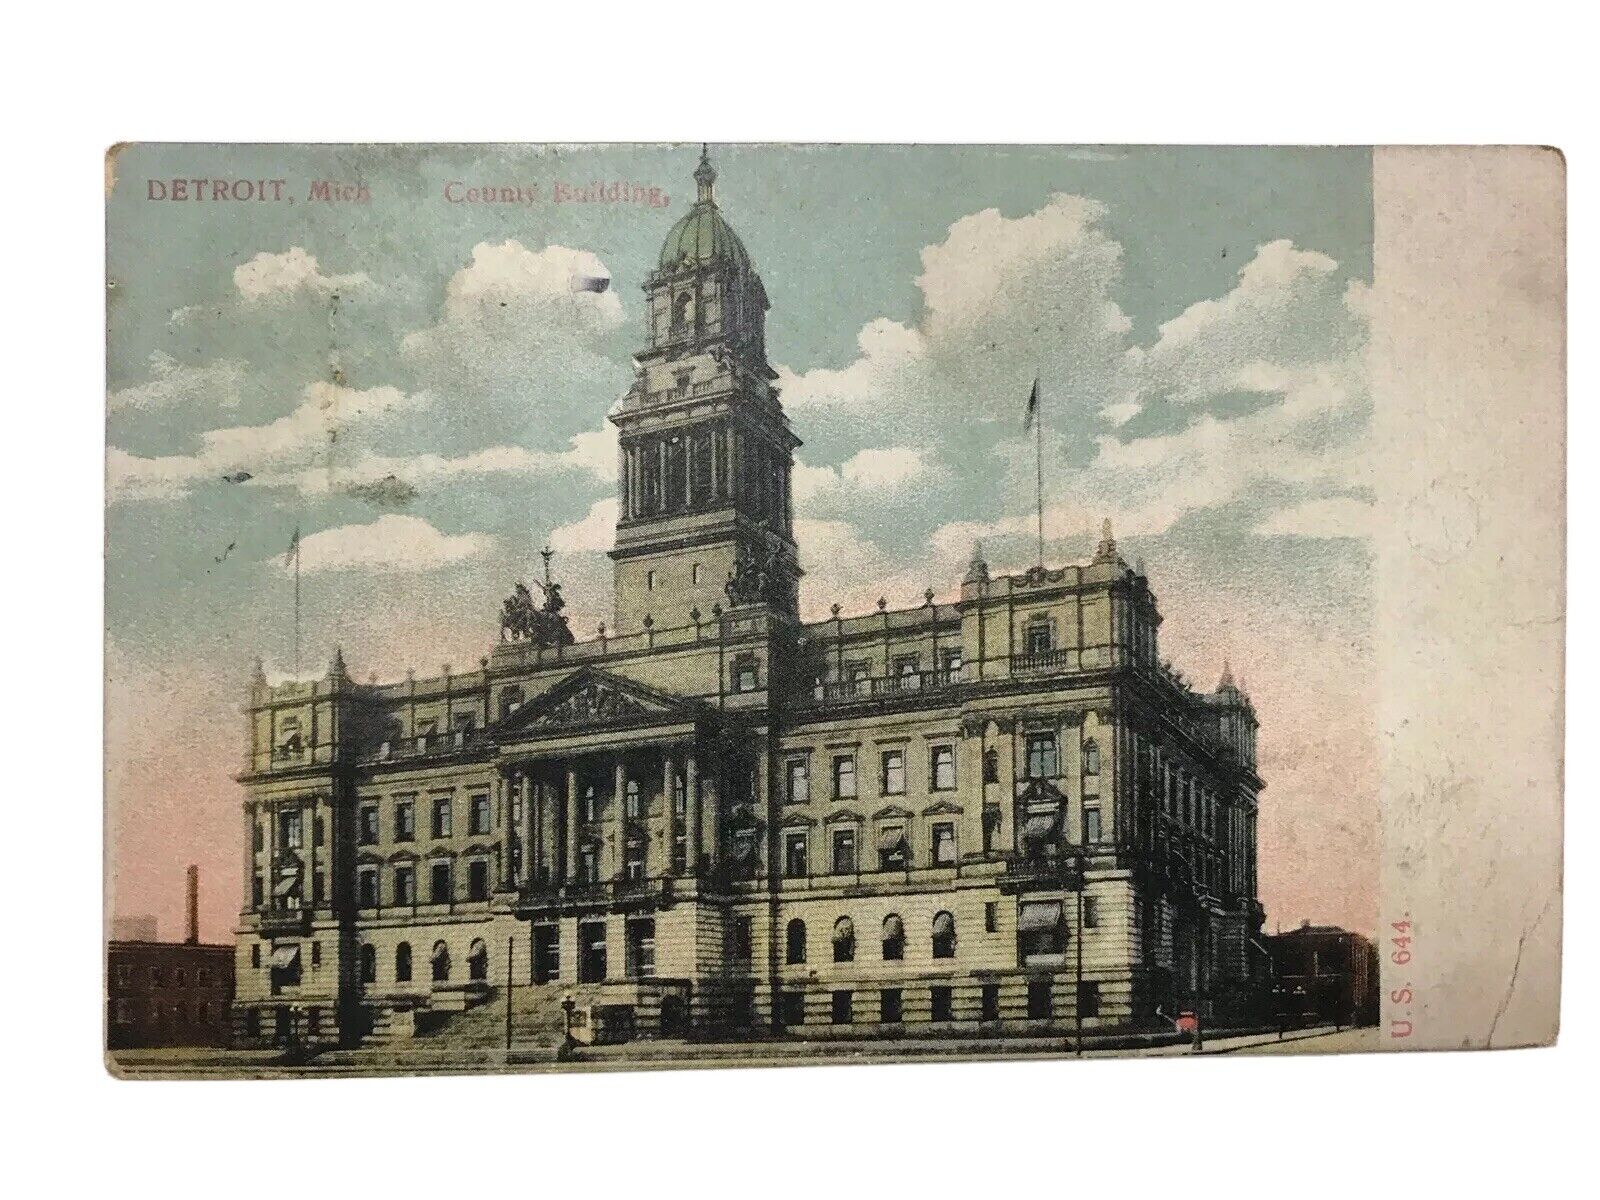 Vintage 1909 Detroit Michigan County Building Post Card